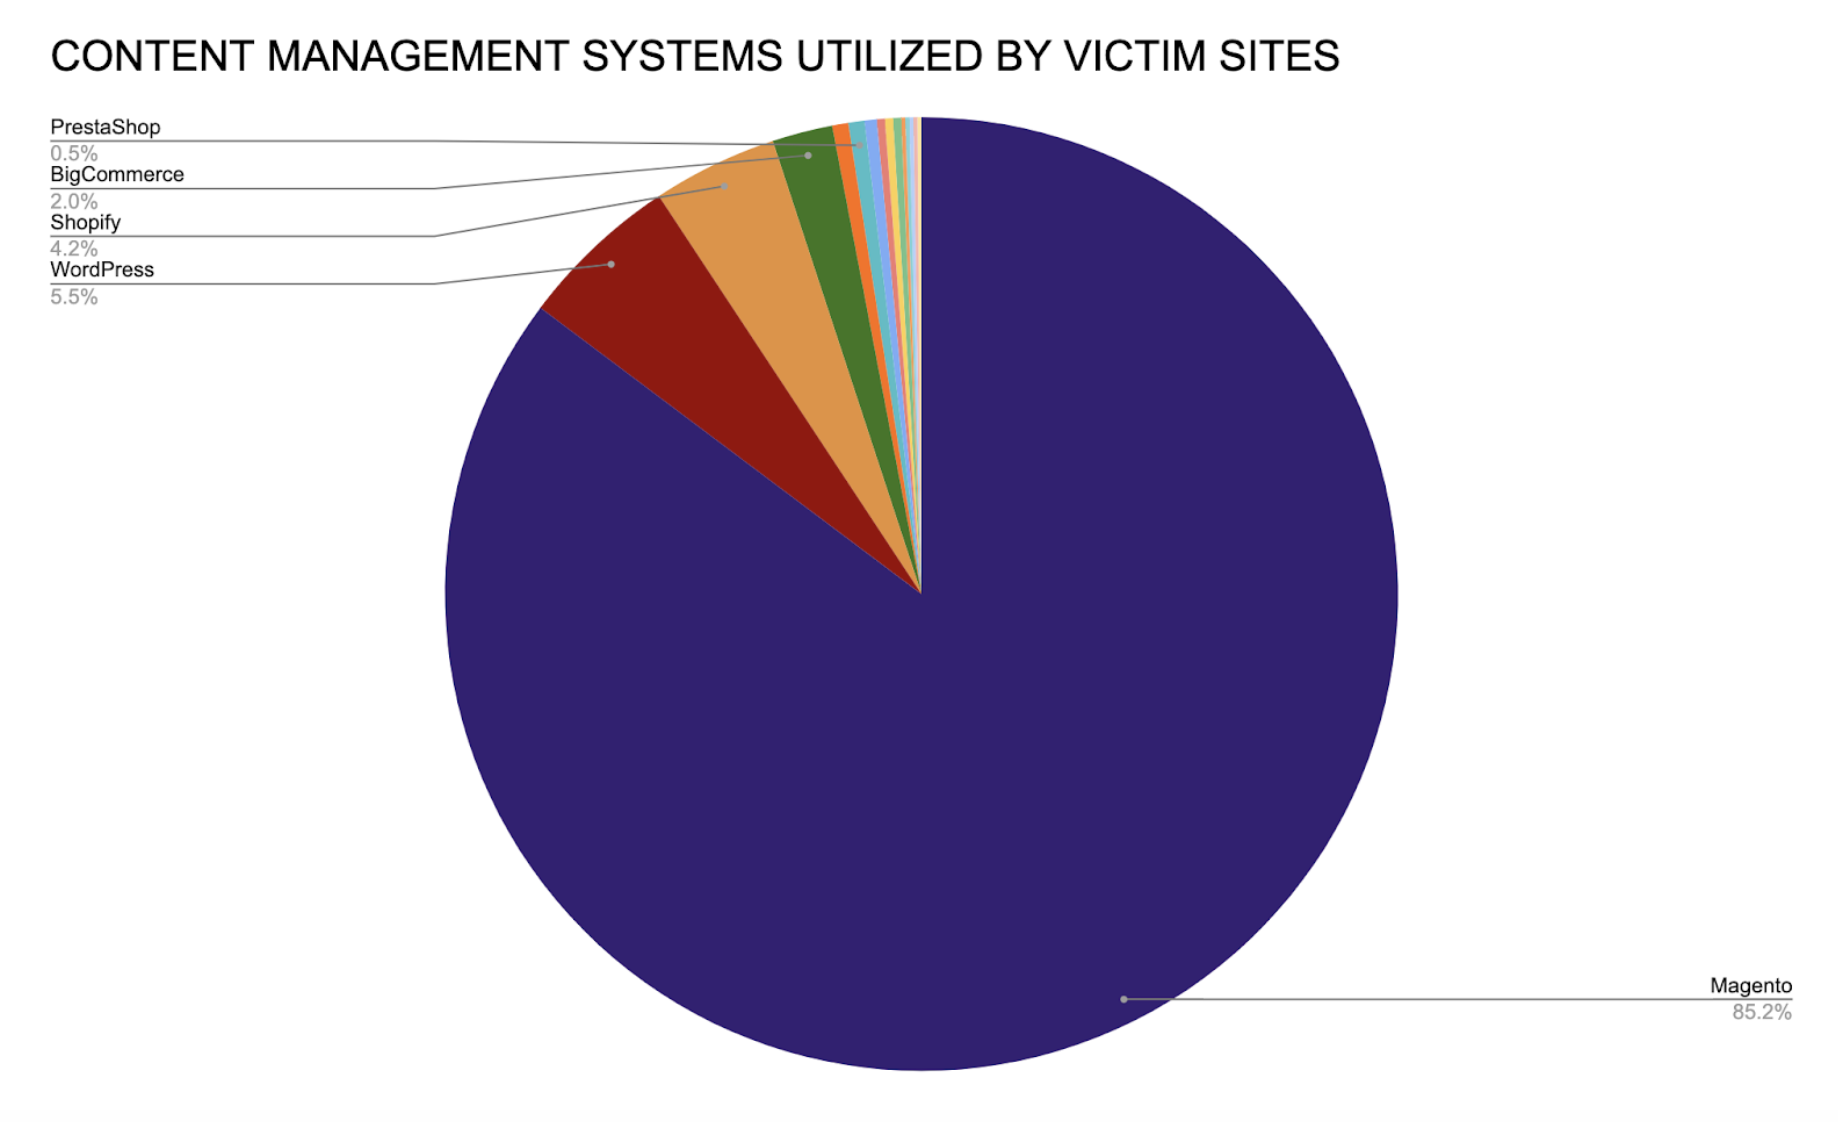 CMS distribution by victim sites pie chart